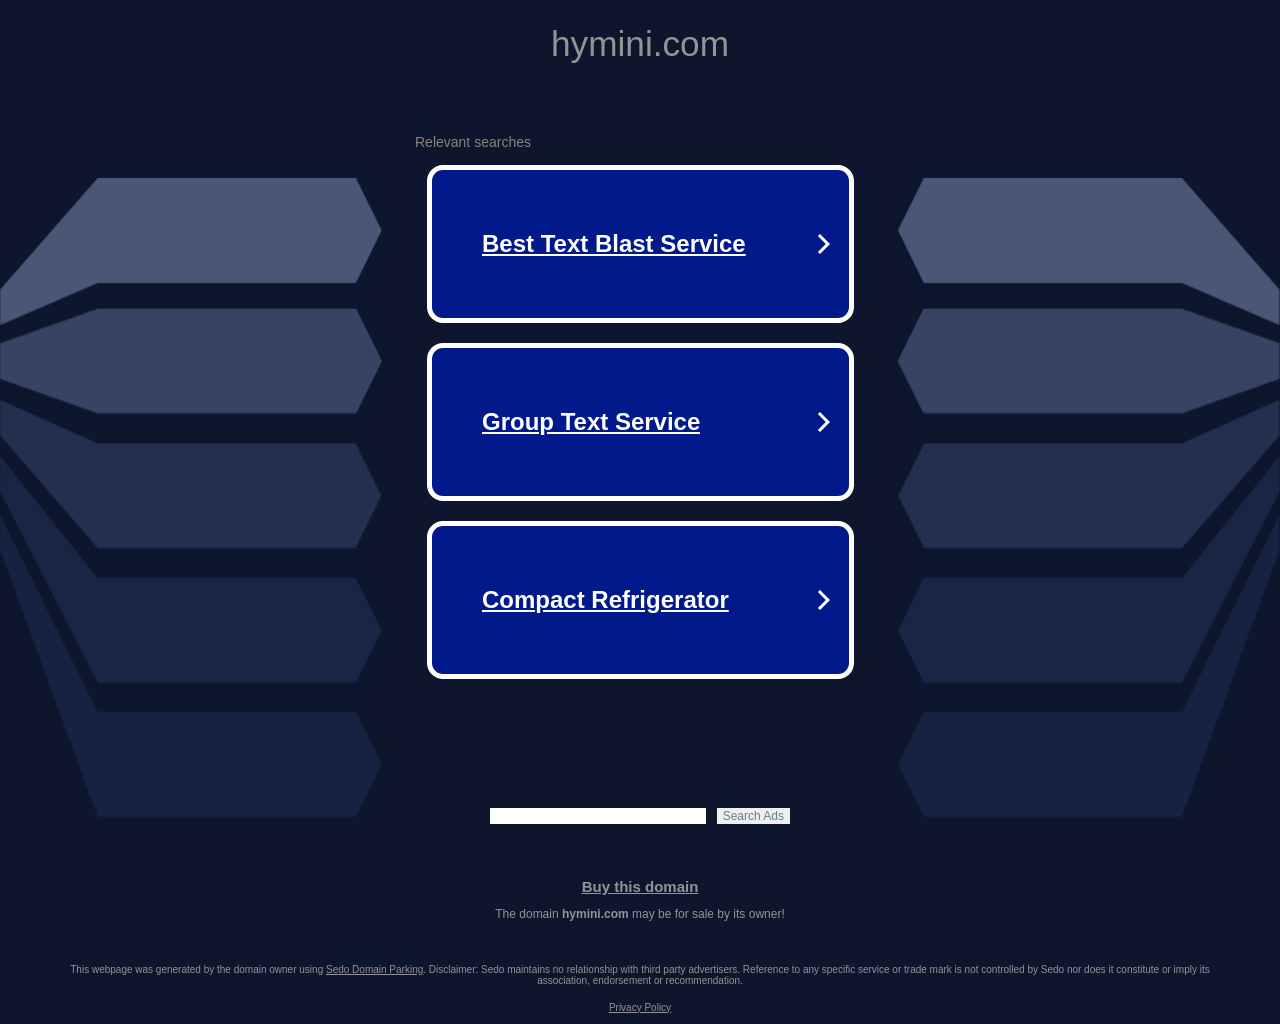 hymini.com